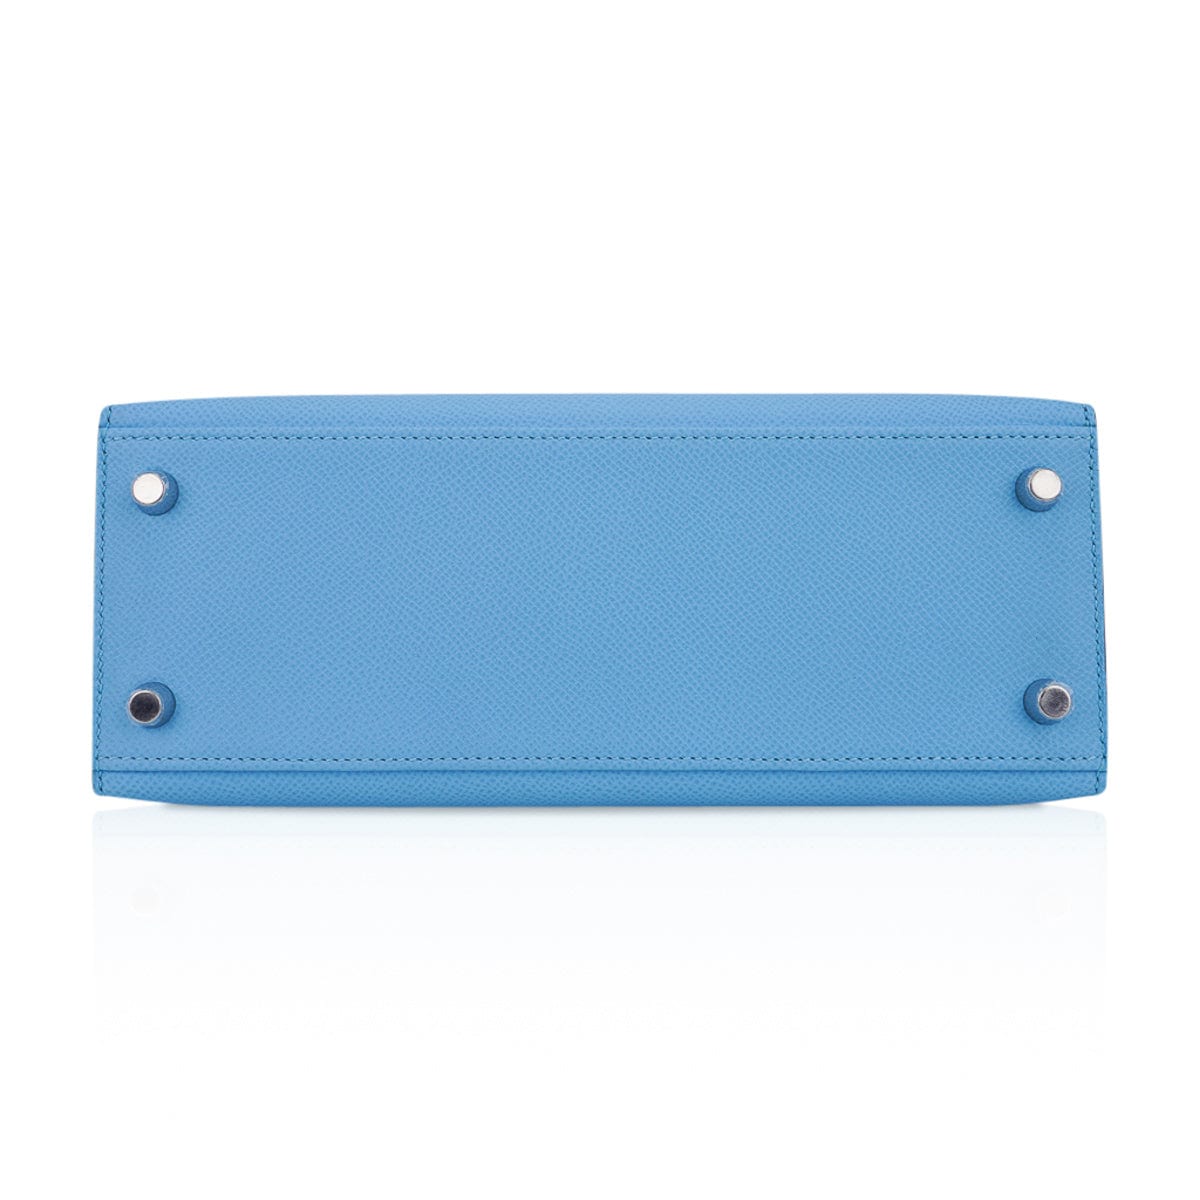 Hermes Blue Jean Epsom Leather Kelly Classic Wallet Hermes